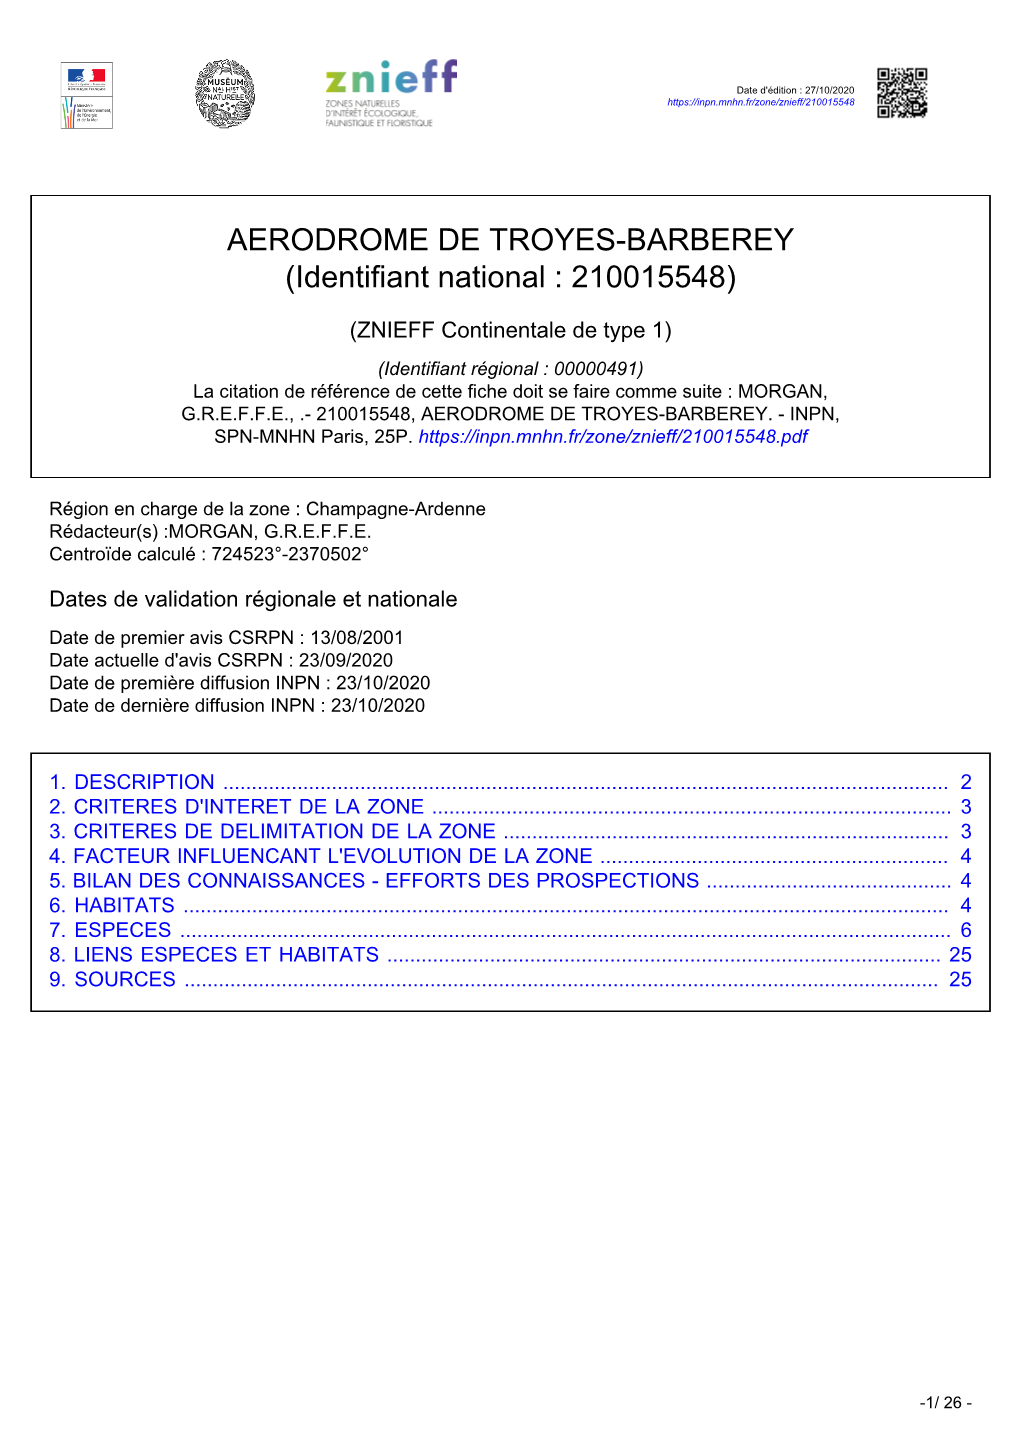 AERODROME DE TROYES-BARBEREY (Identifiant National : 210015548)